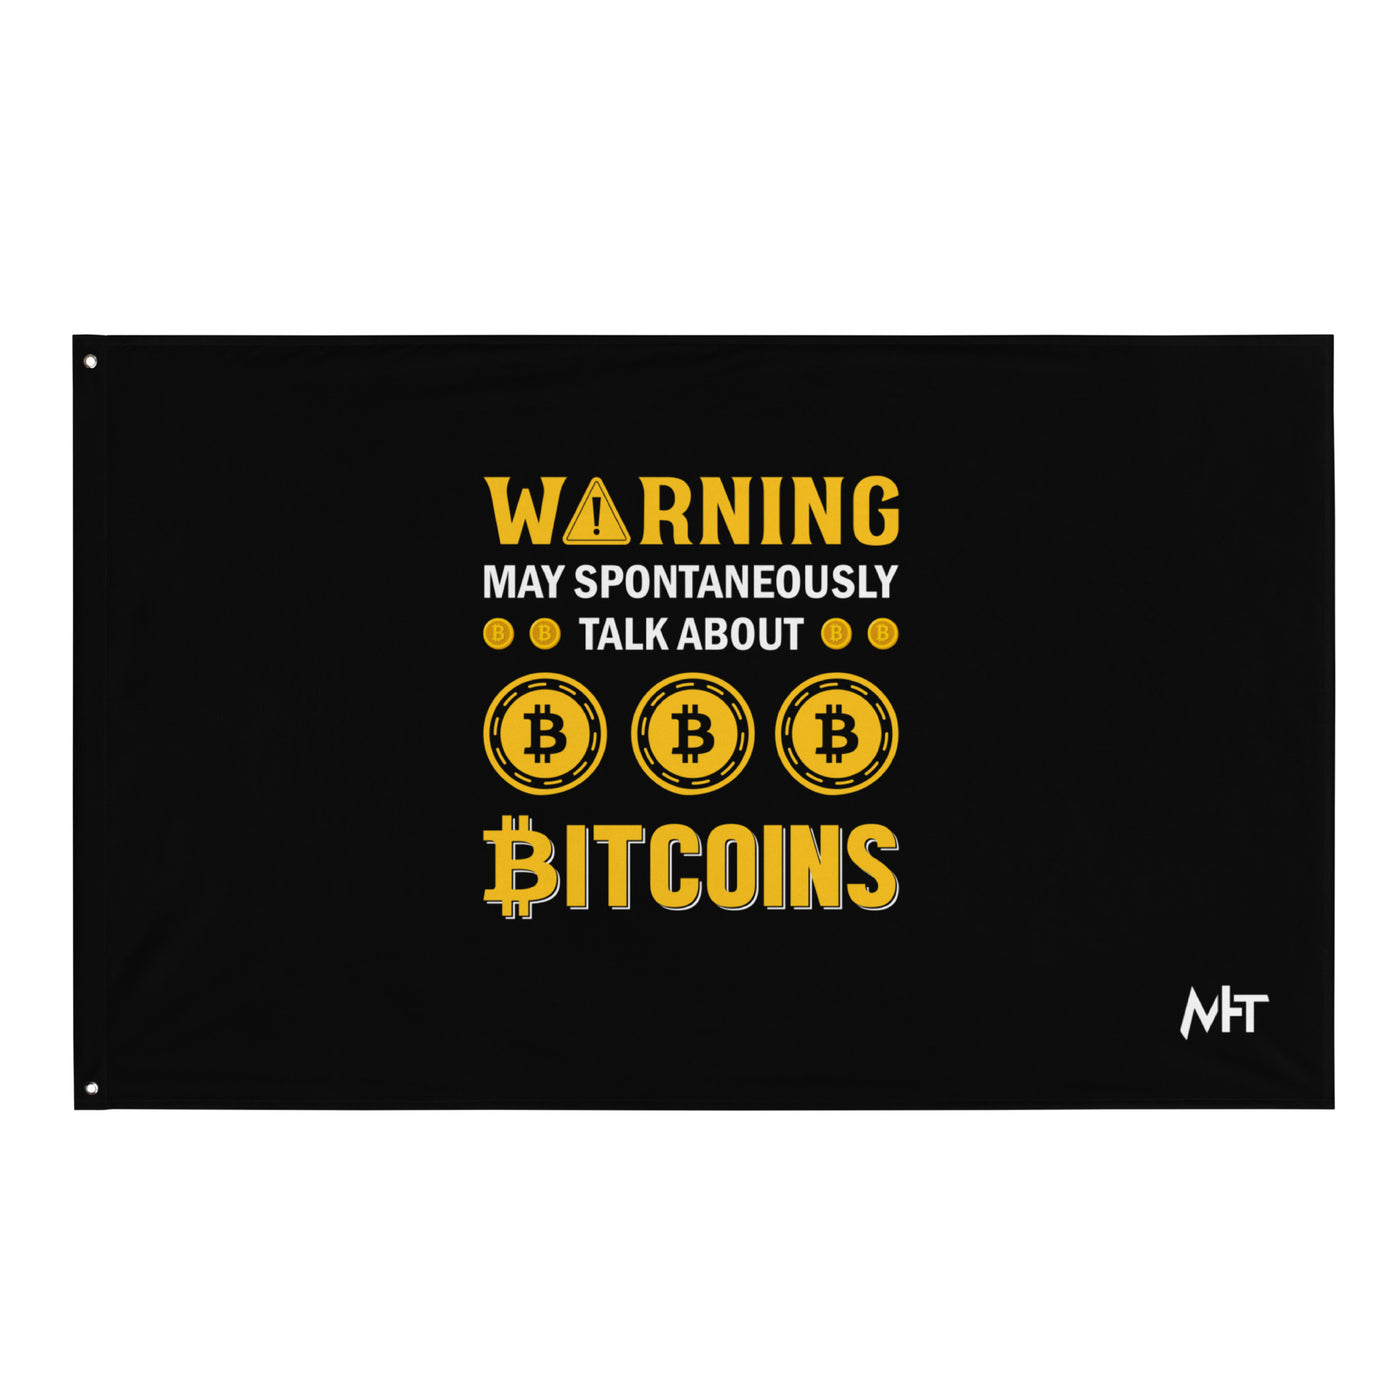 Warning! May Spontaneously talk about Bitcoins - Flag